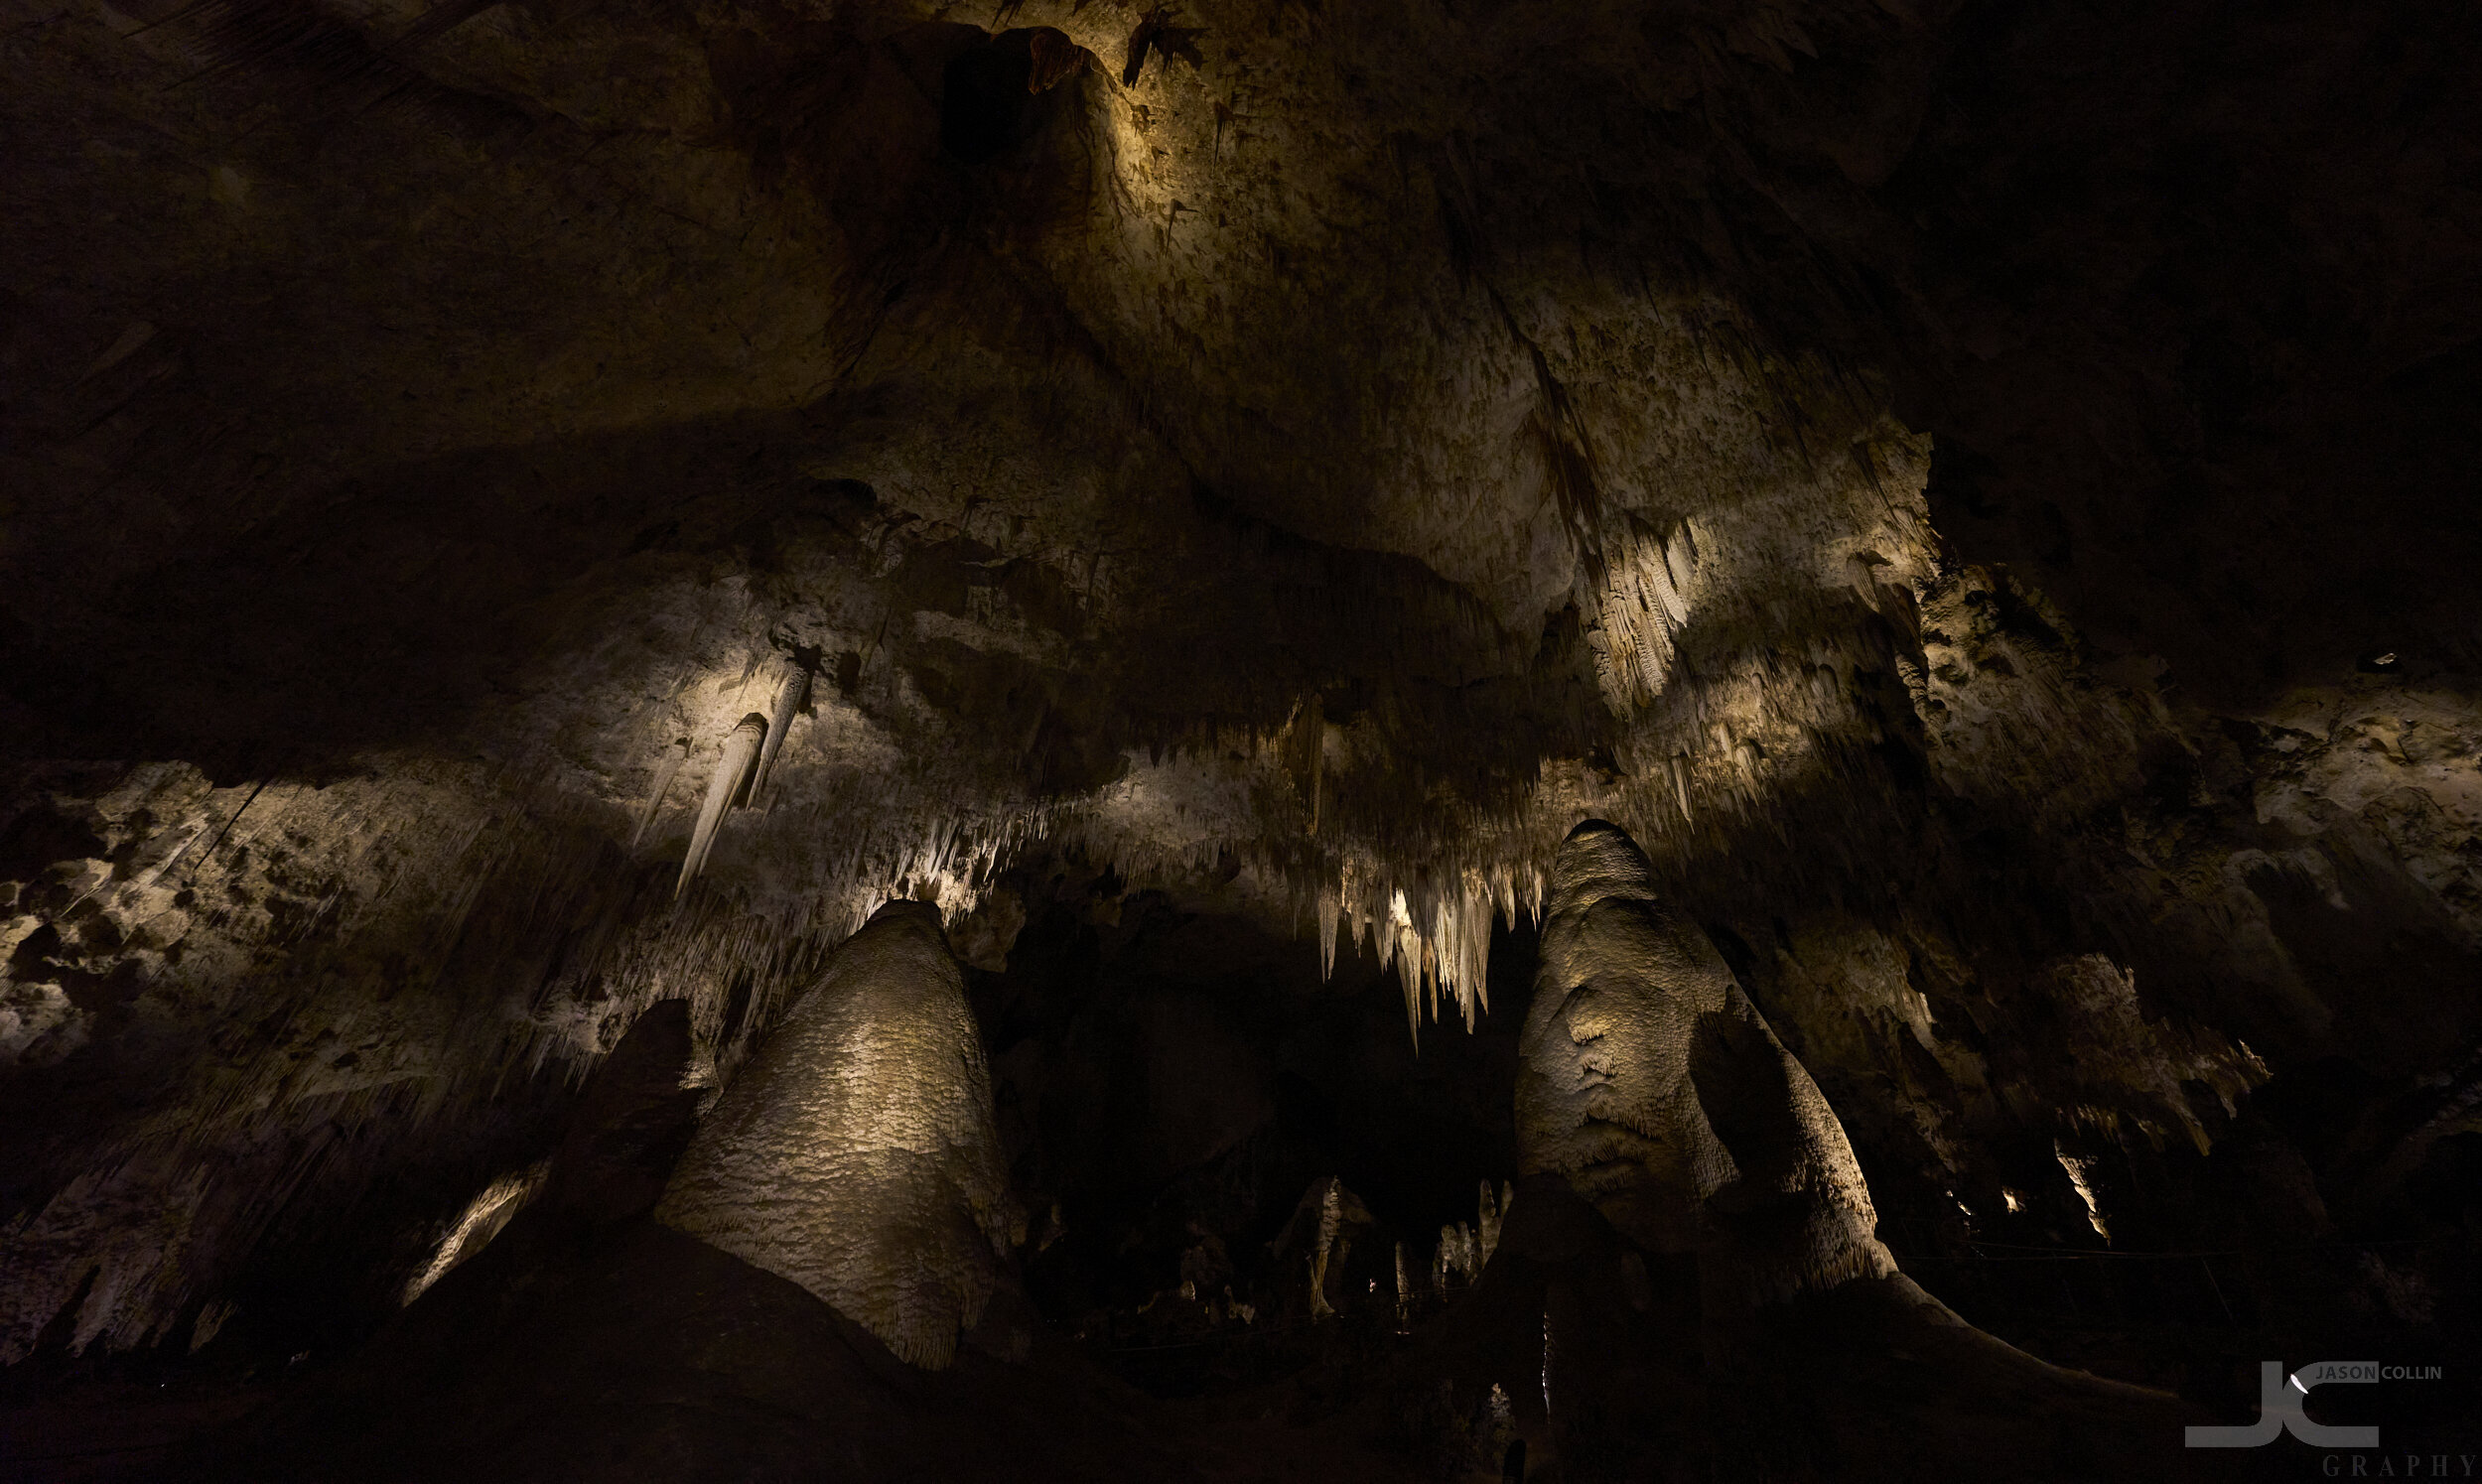 carlsbad-caverns-7-10-2021-nm-23569.jpg